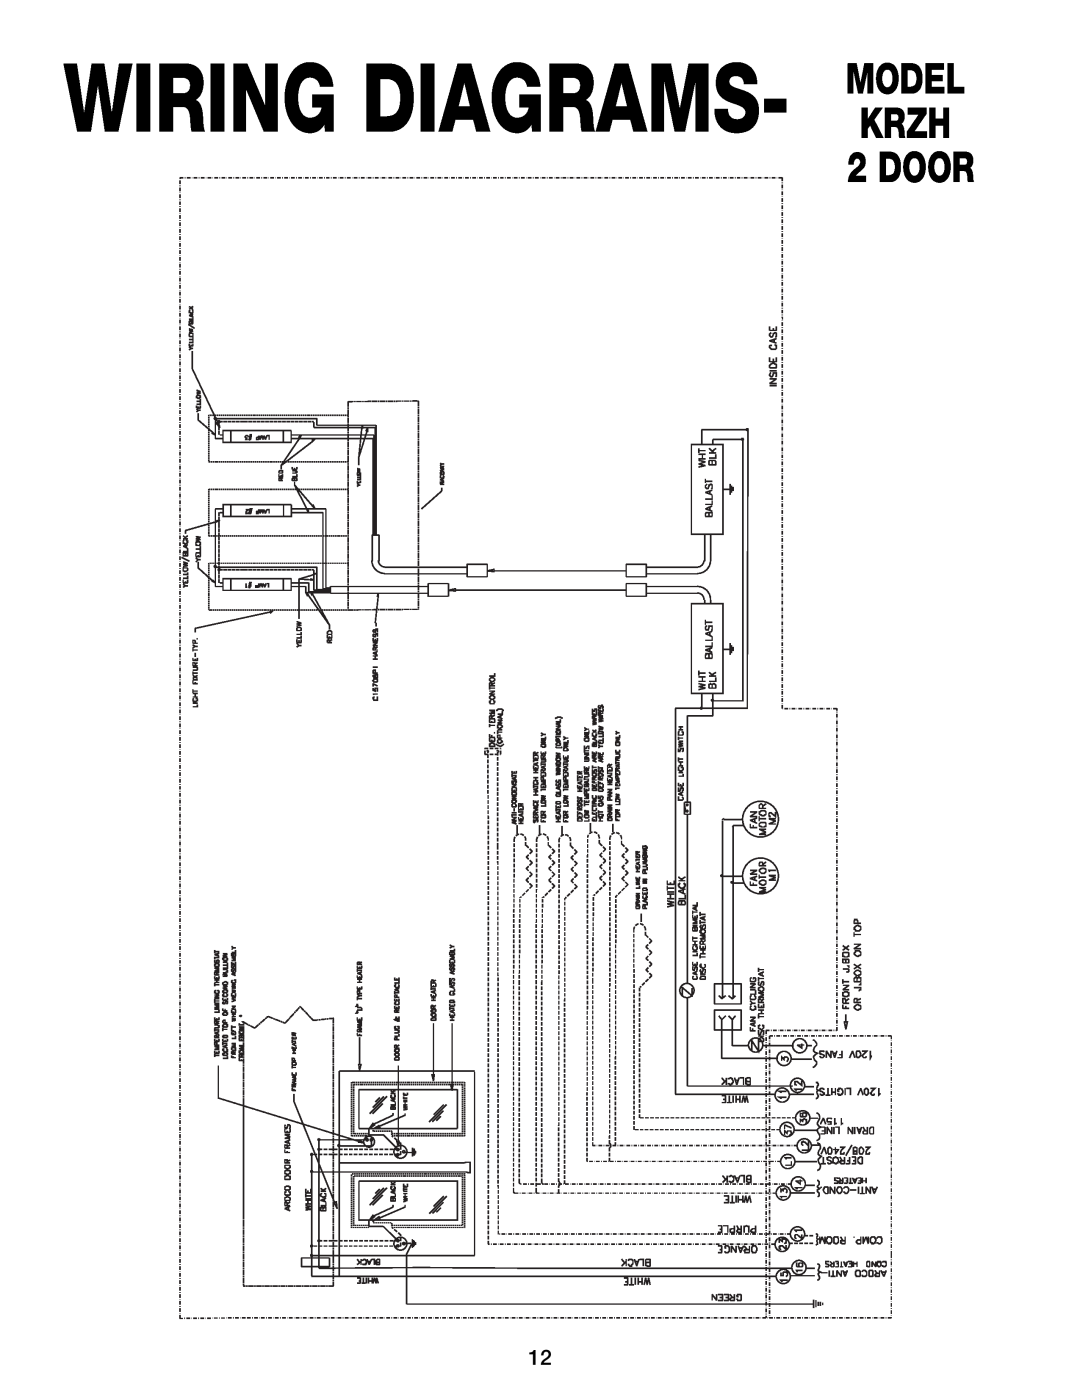 Hill Phoenix KRZH manual Wiring Diagrams- Modelkrzh, Door 